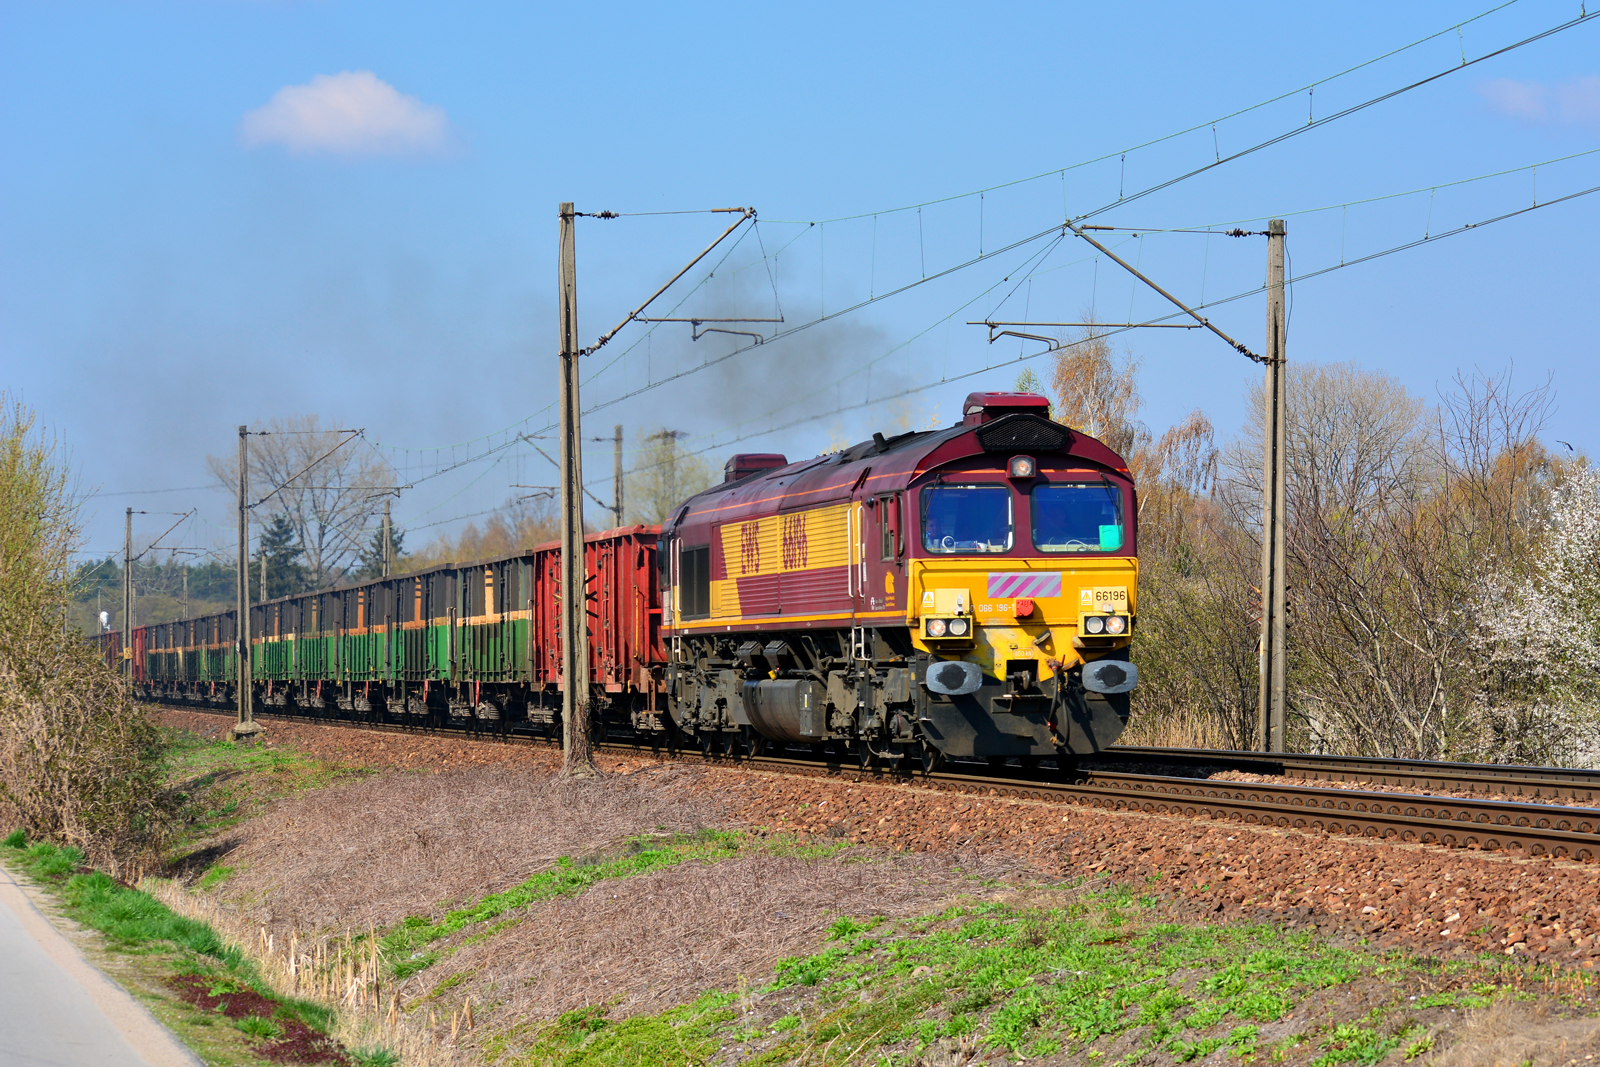 Class 66196